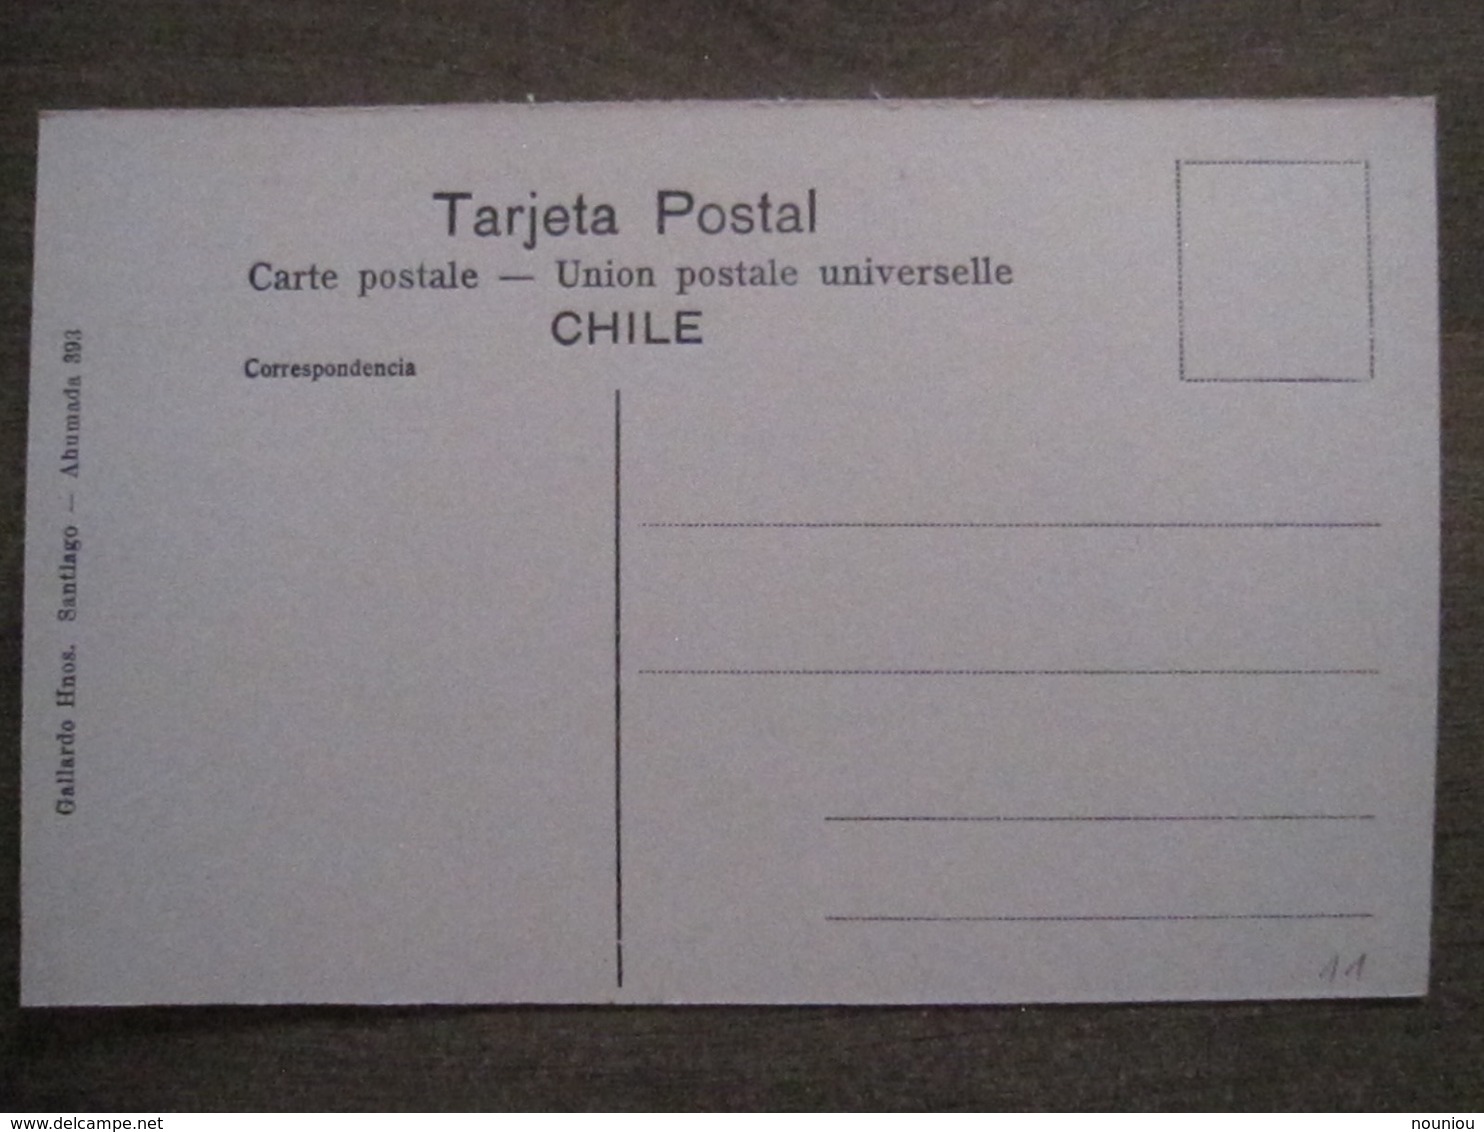 Tarjeta Postal - Chile Chili - Santiago - Calle Ahumada Desde Huerfanos - Hnos Ahumada 393 No. 109 - Foto Leon - Chili